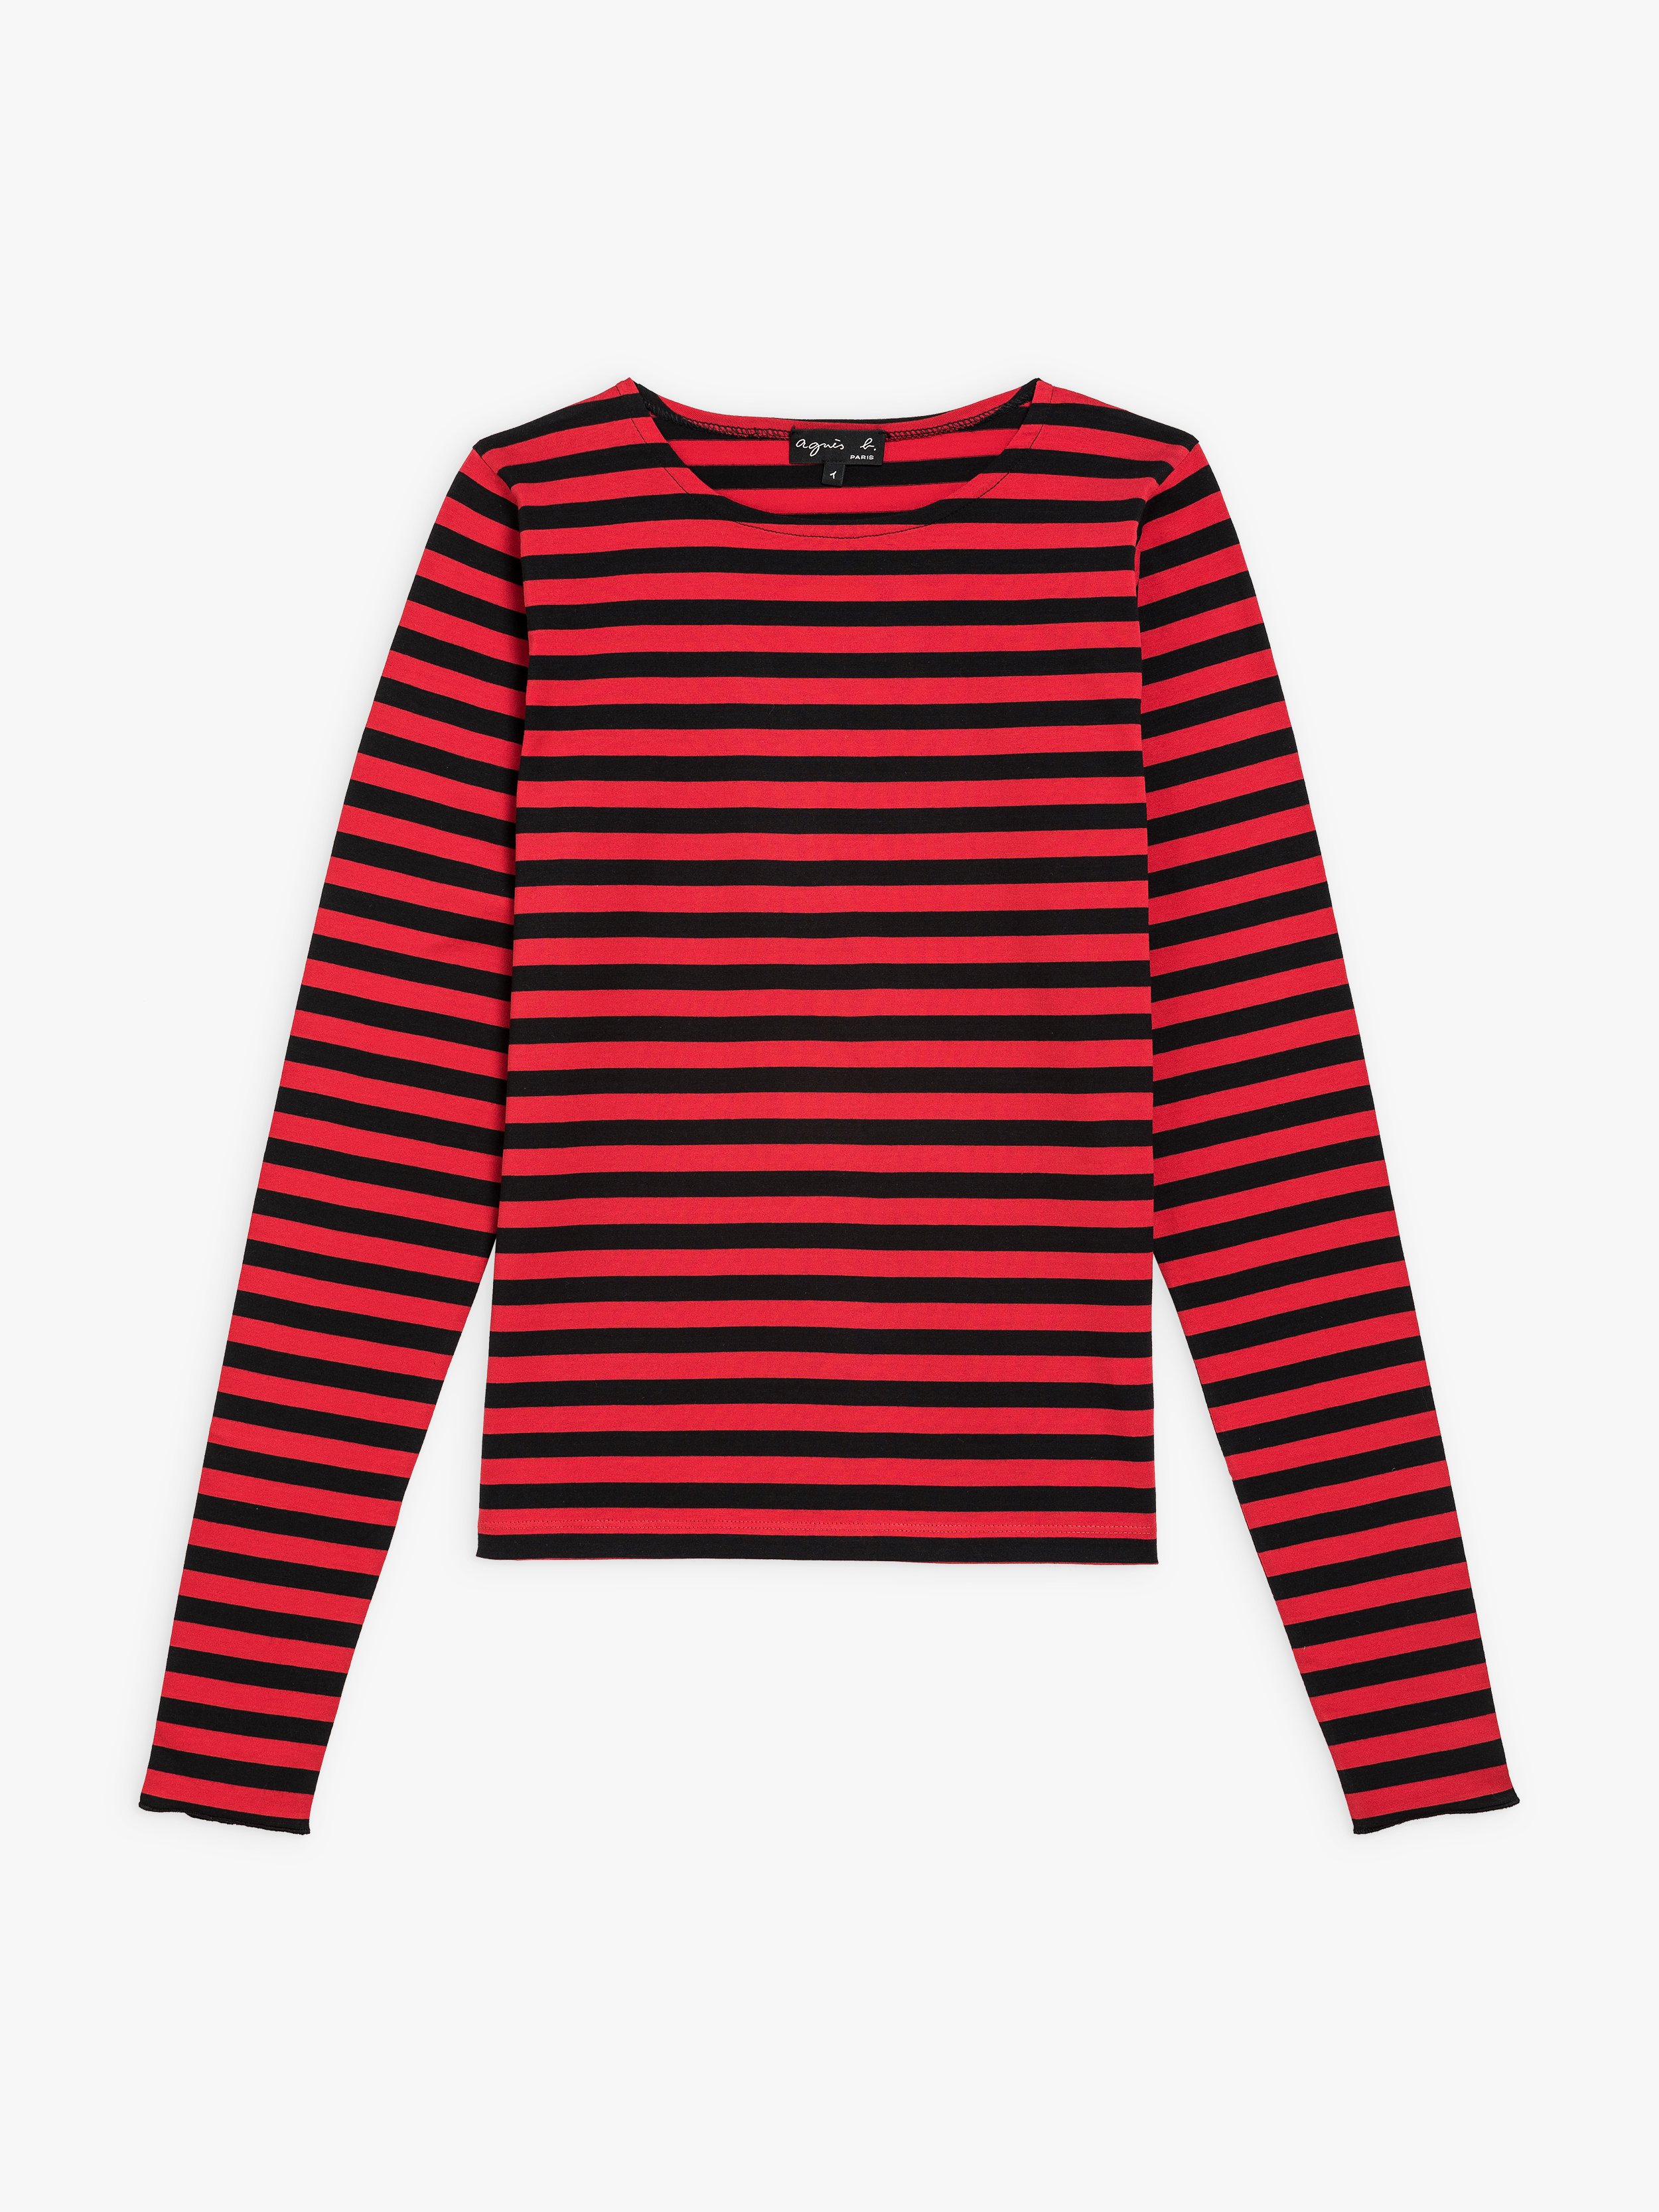 red black striped t shirt